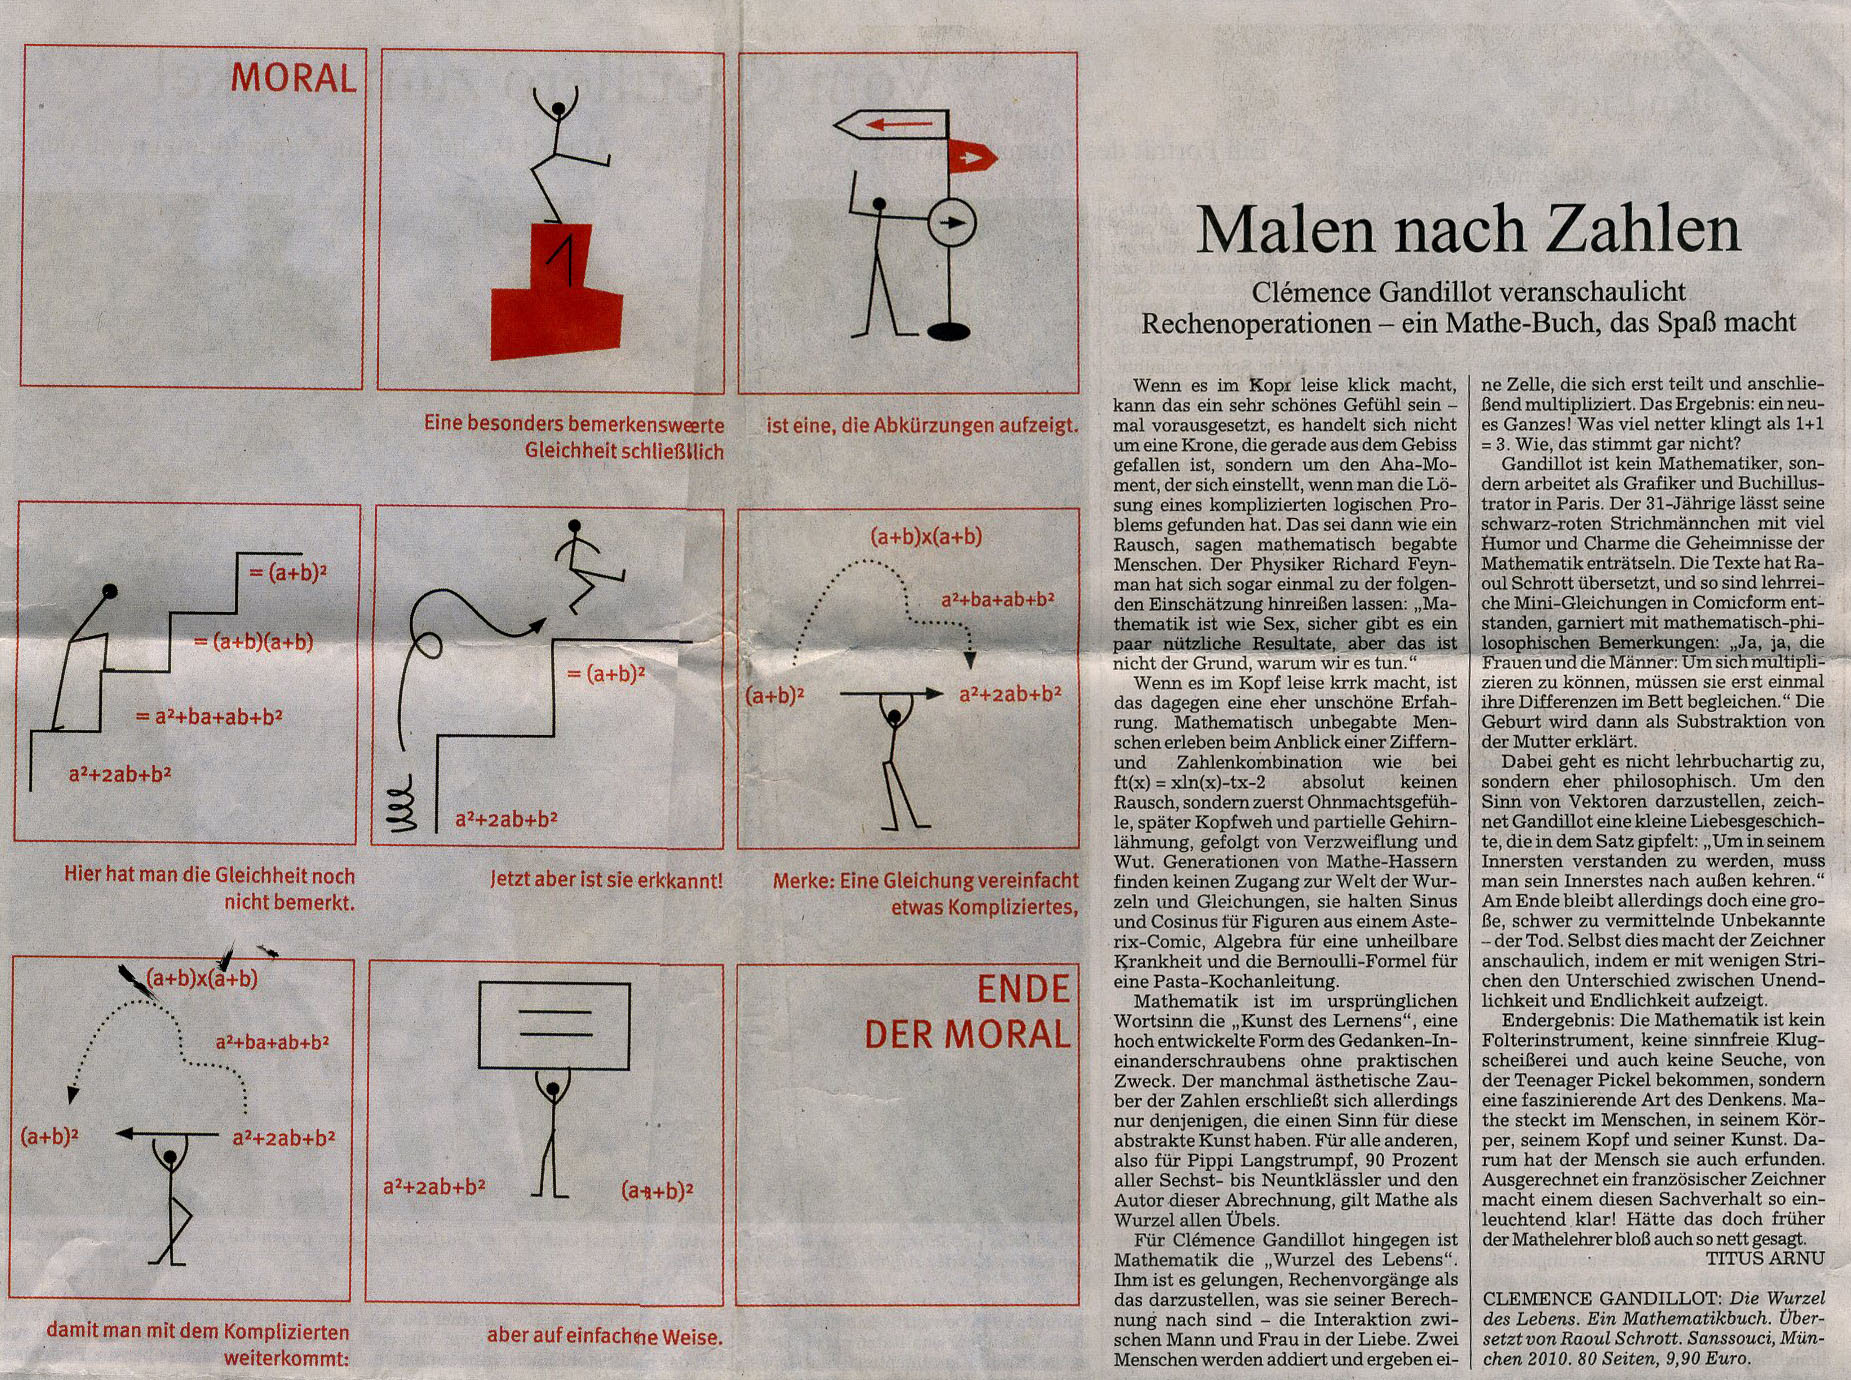 2010_09_17_Süddeutsche Zeitung_Clemence Gandillot coupe